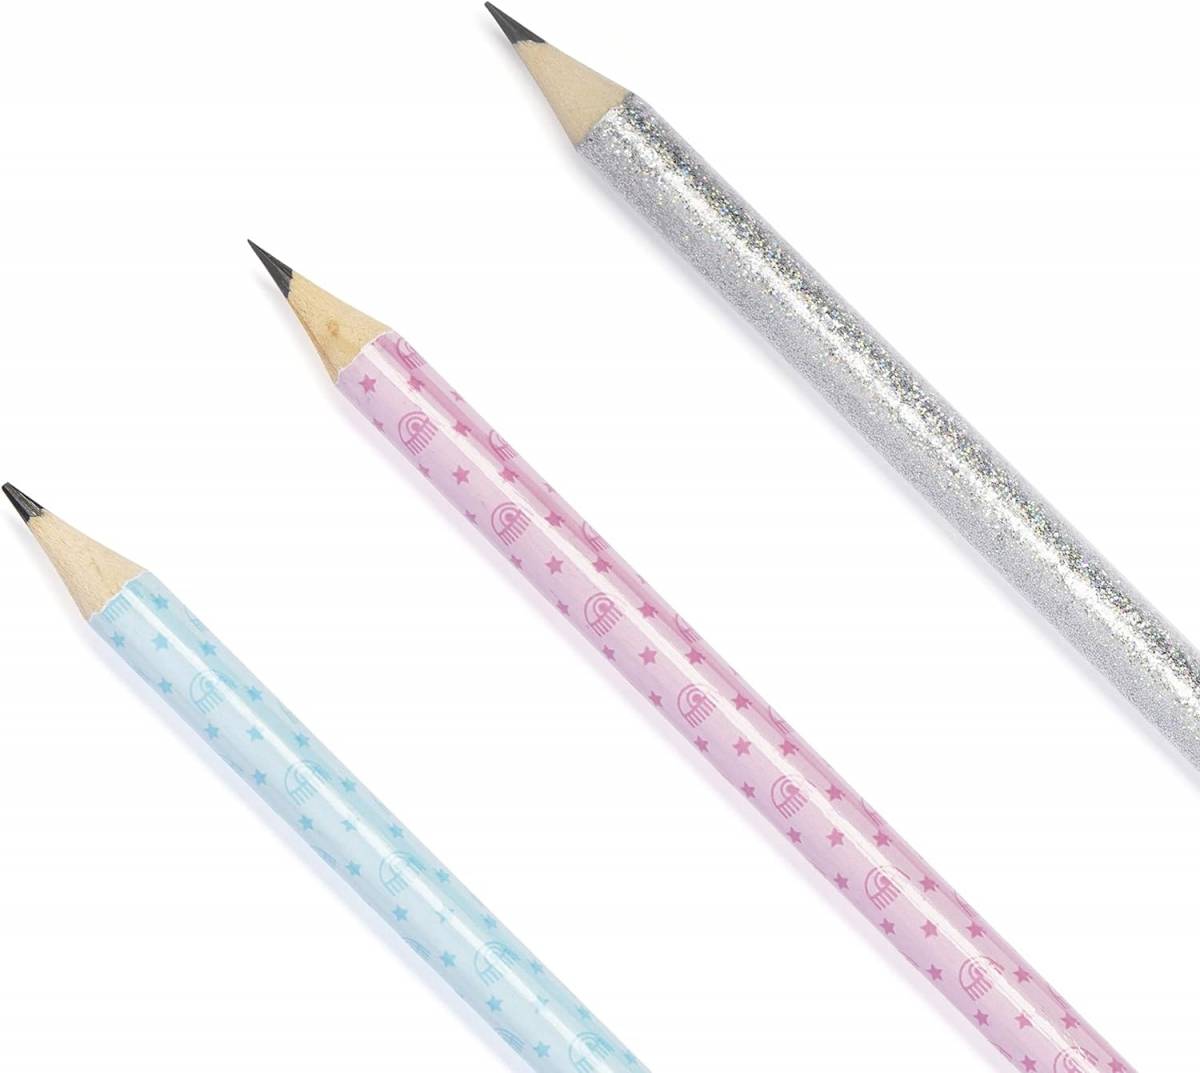 Creioane color cu sclipici Chiara Ferragni 3 bucati in set roz, albastru deschis si verde 0.5x19cm